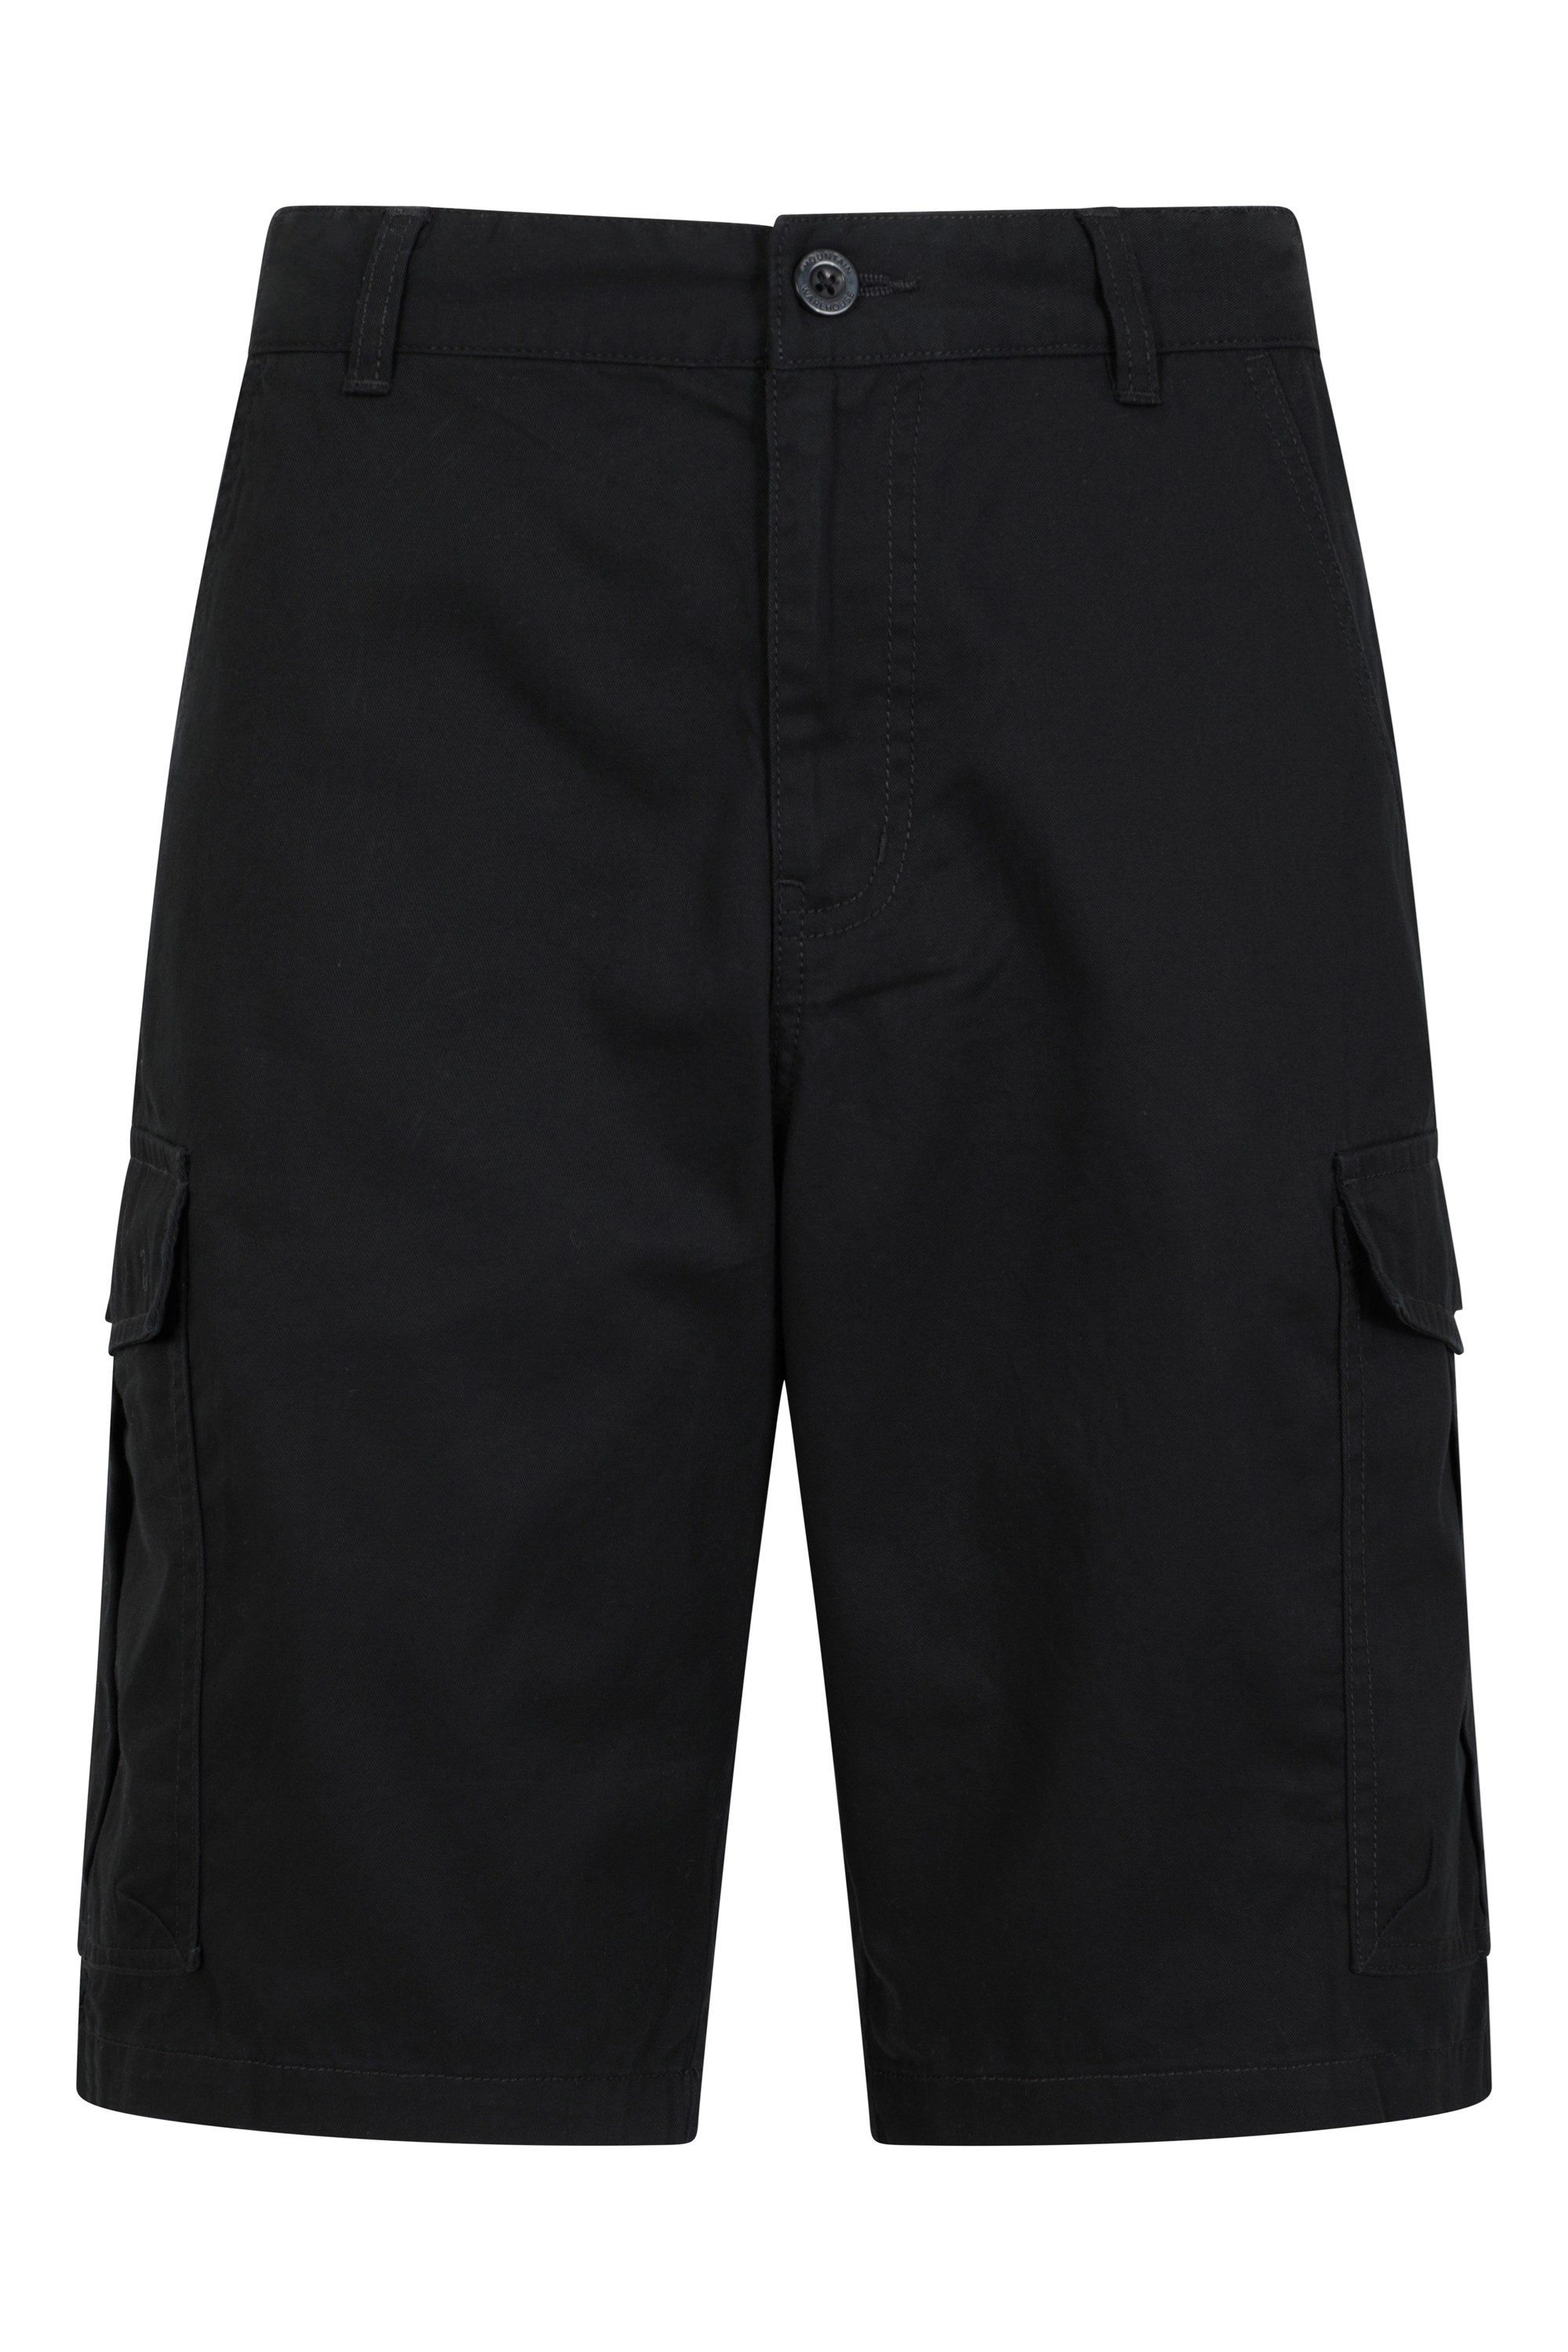 Lakeside Mens Cargo Shorts - Black